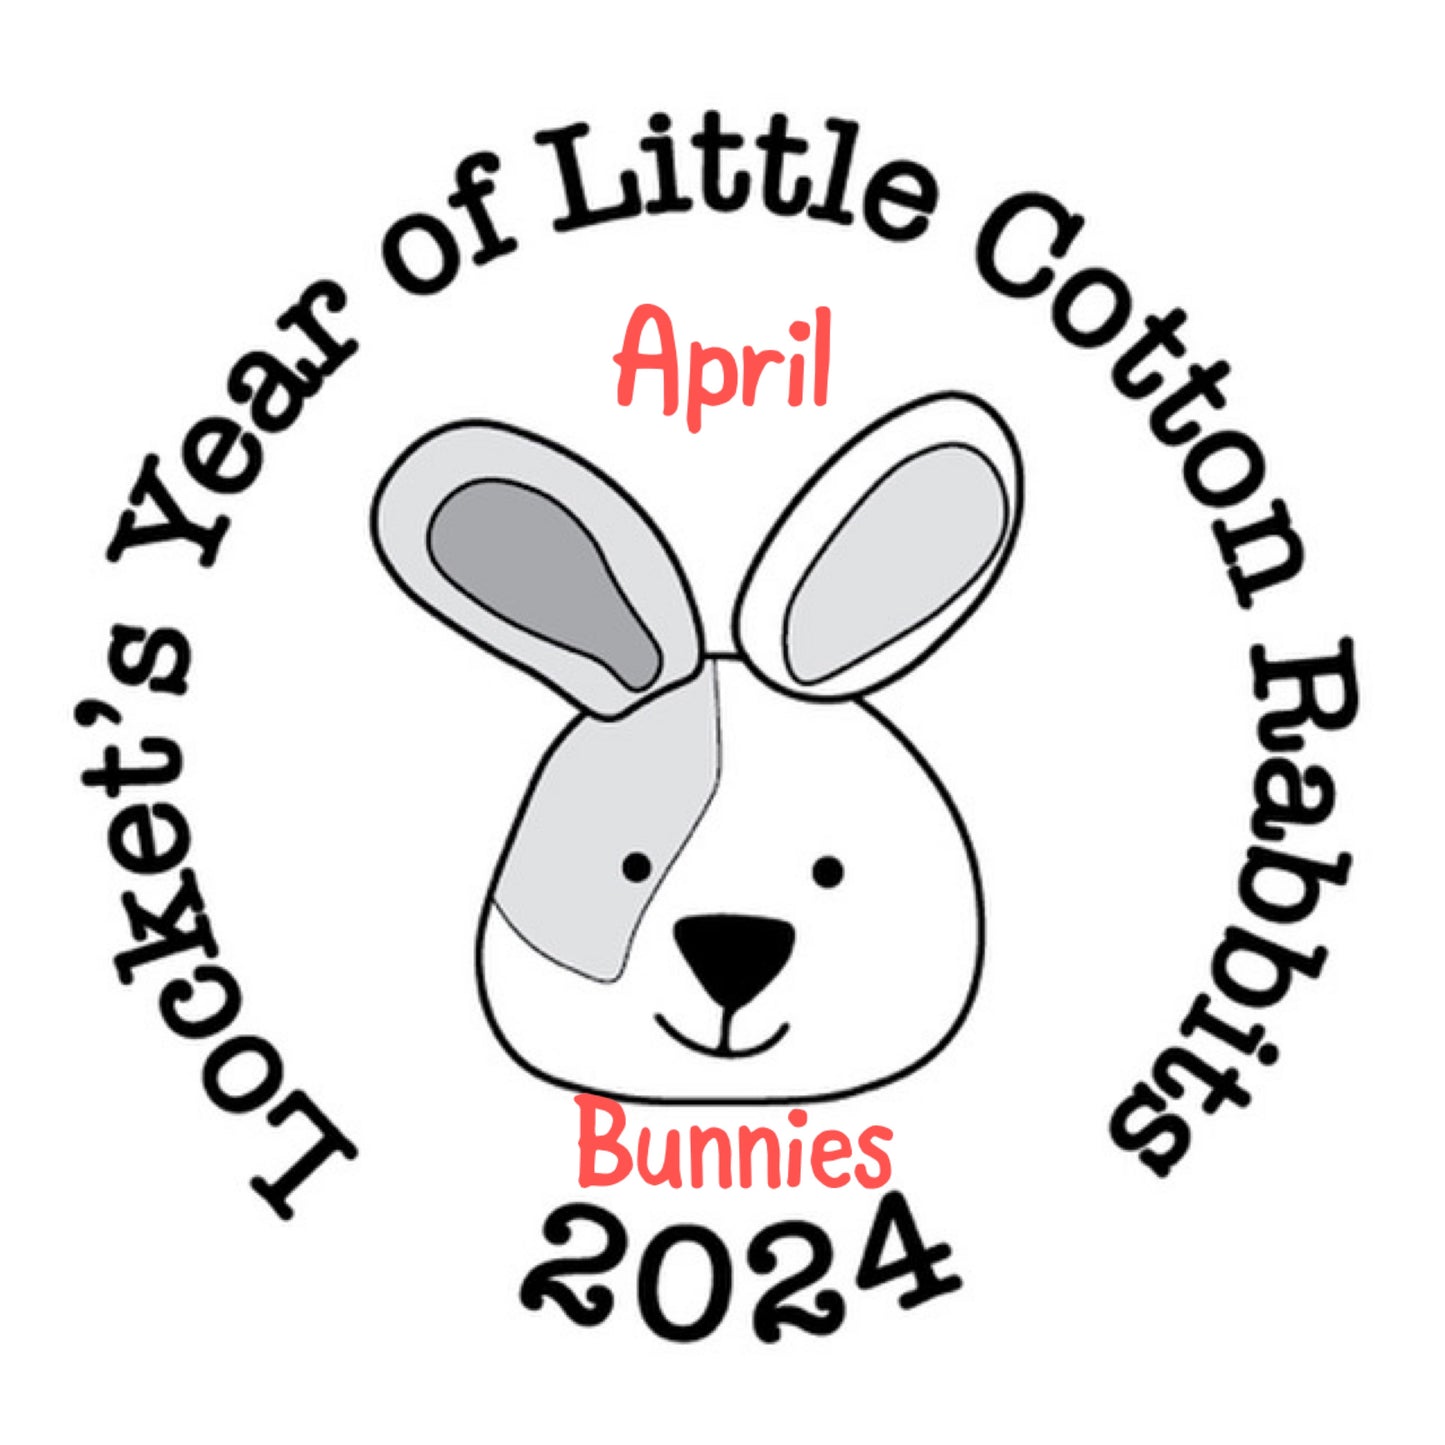 Locket's Year of Little Cotton Rabbits - Rowena Bunny